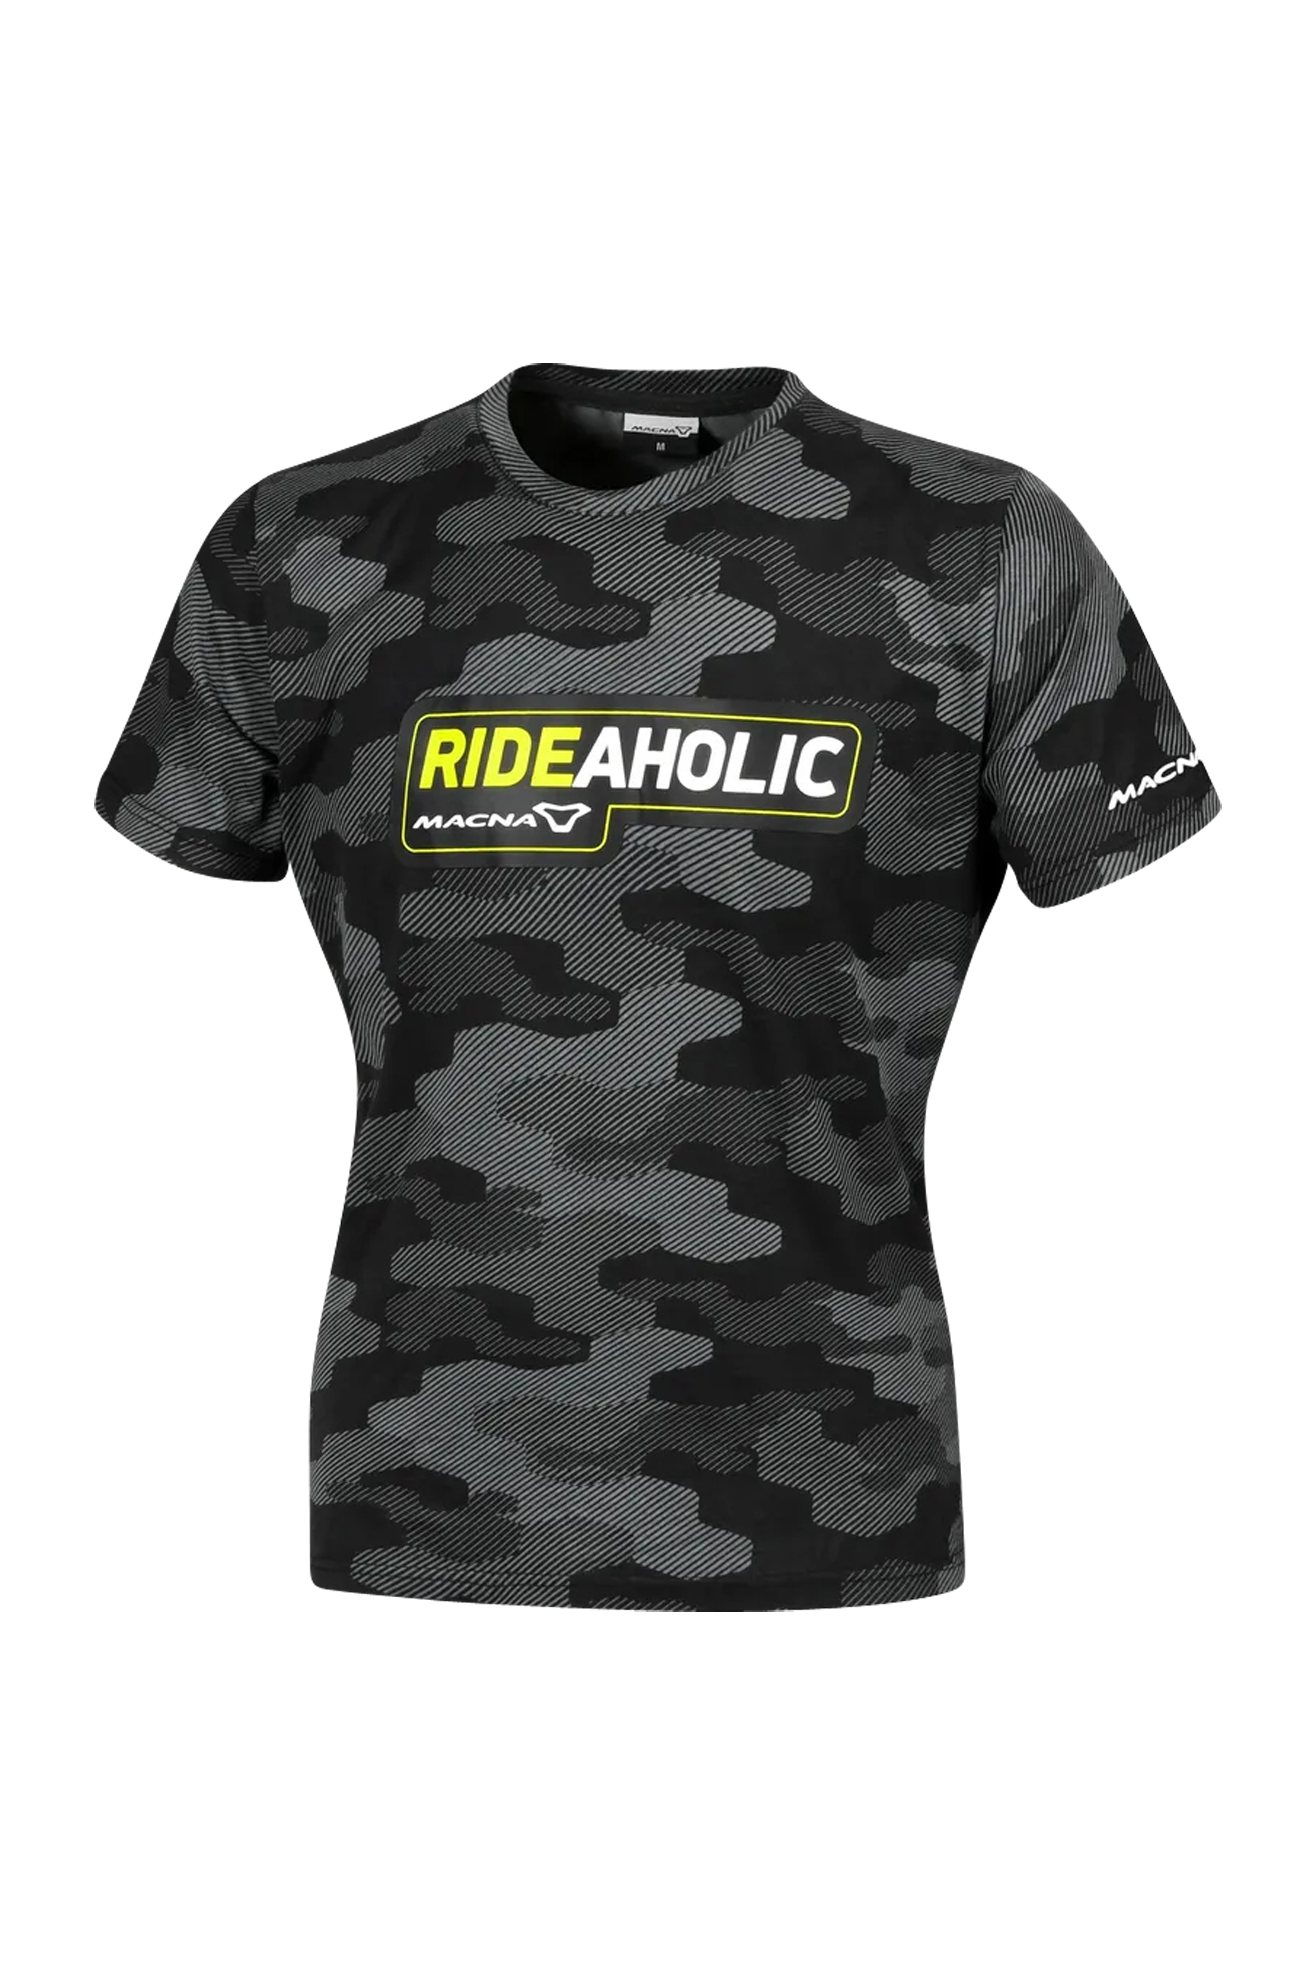 Macna Camiseta Mujer Dazzle Rideaholic Negro-Gris-Amarillo Fluo